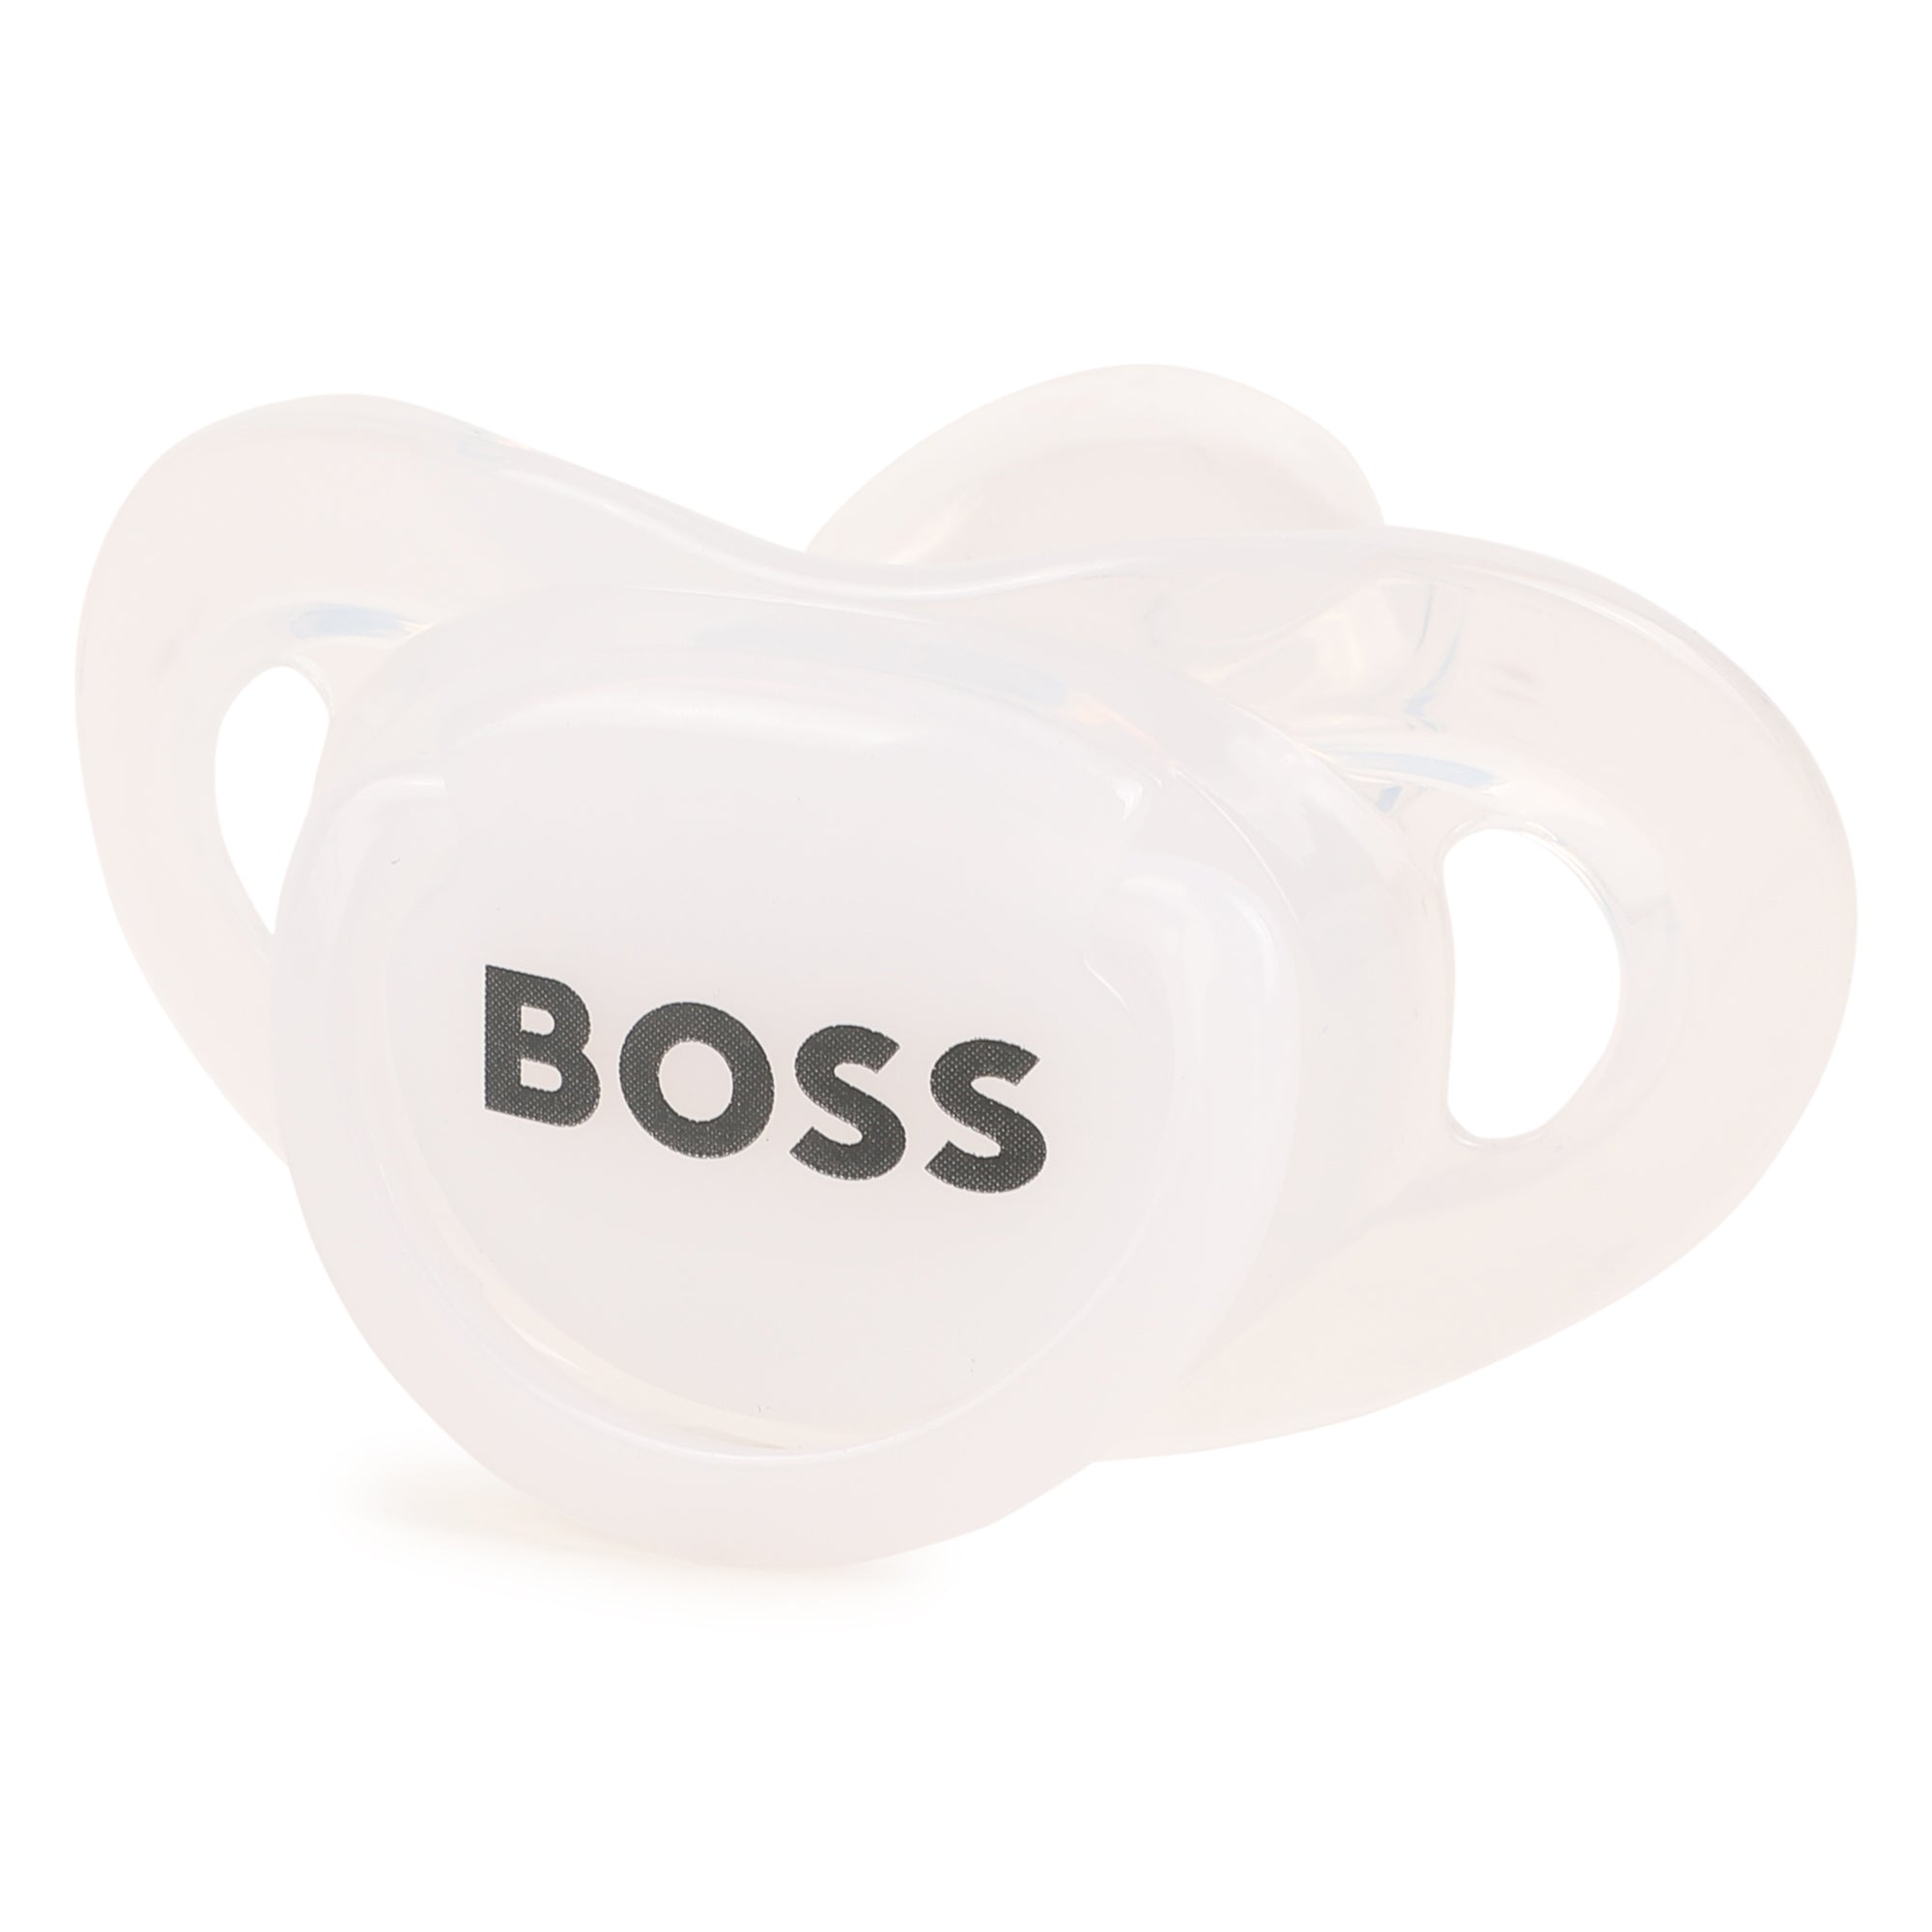 Boss Logo Pacifier in White